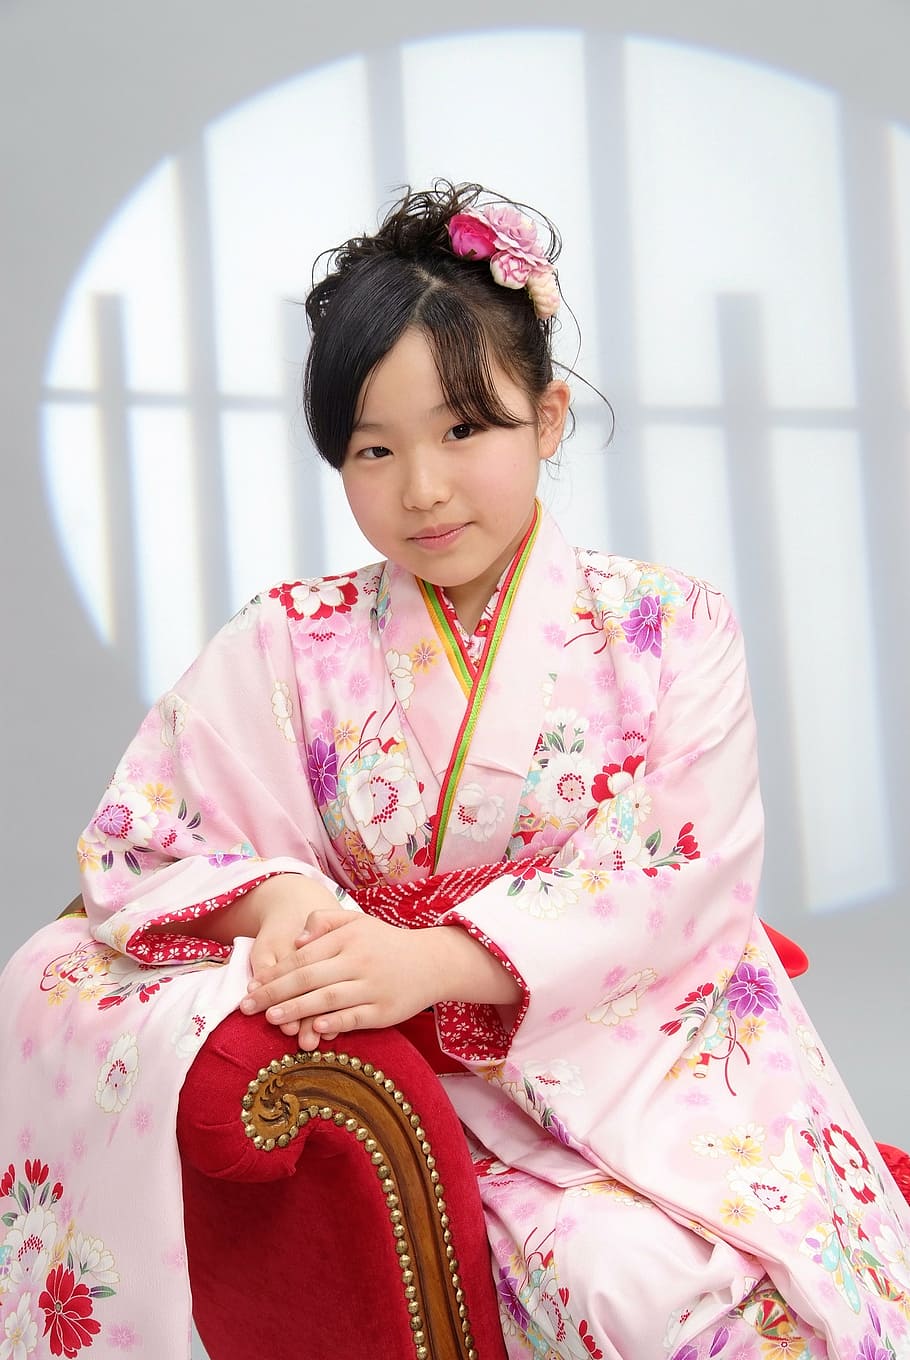 n, o, k, kimono, Jepang, Budaya Jepang, Etnis Jepang, perempuan, orang-orang, Pakaian tradisional